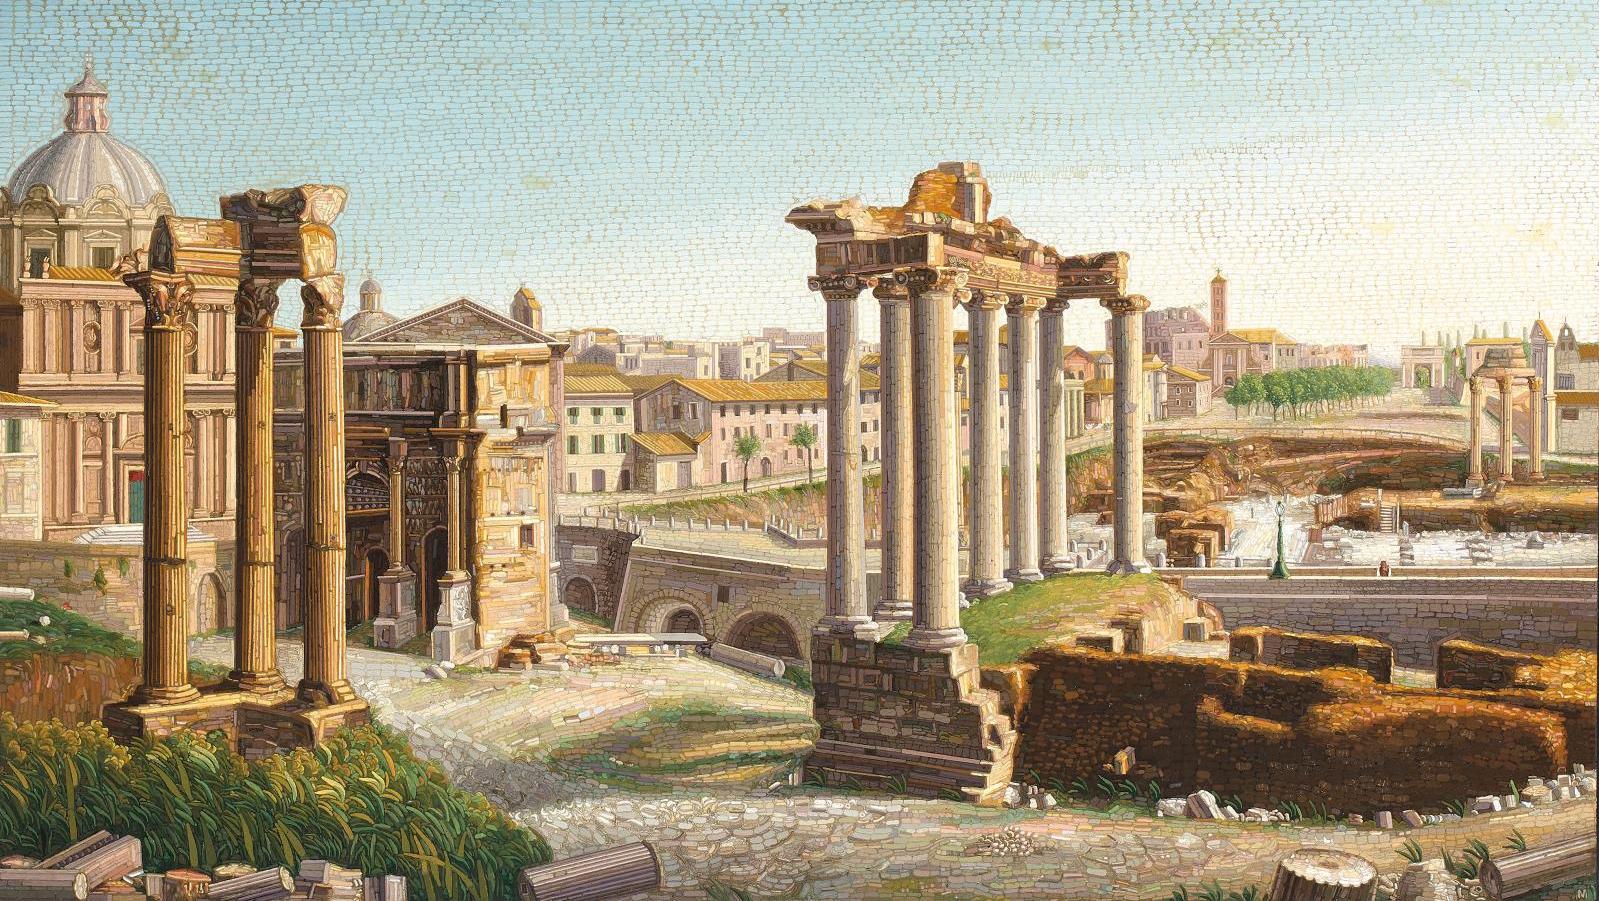   Le Forum romain